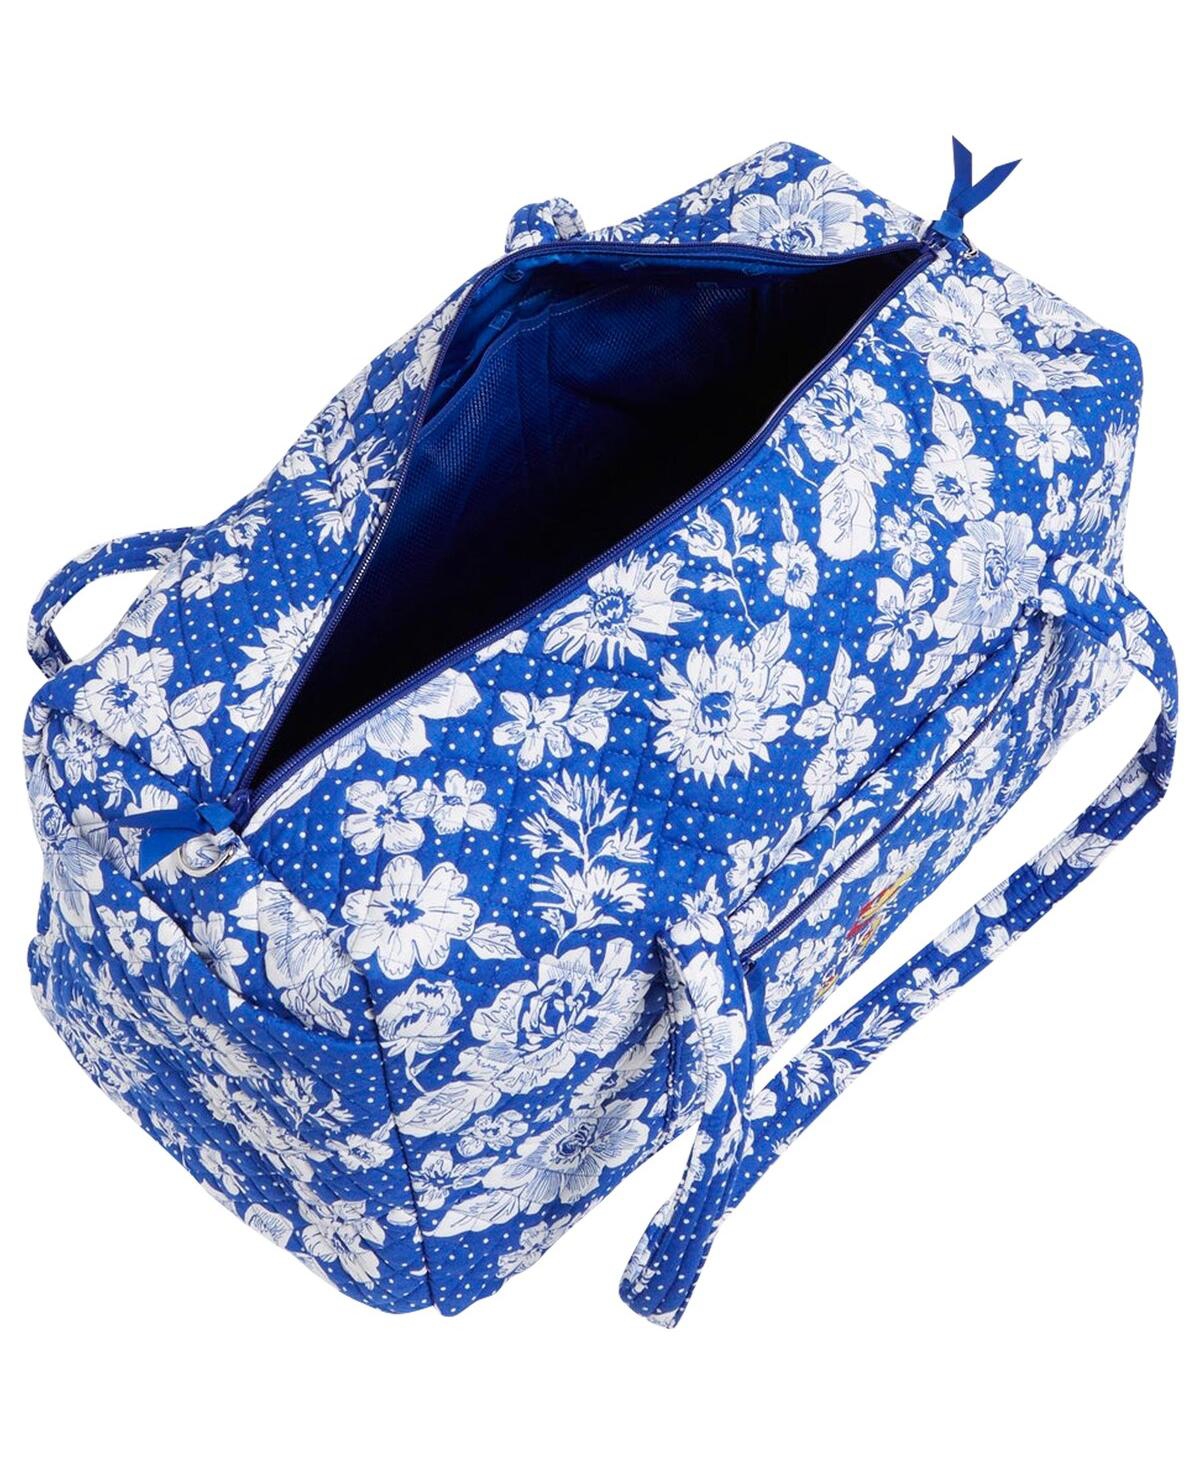 Shop Vera Bradley Kansas Jayhawks Rain Garden Large Travel Duffel Bag In Blue